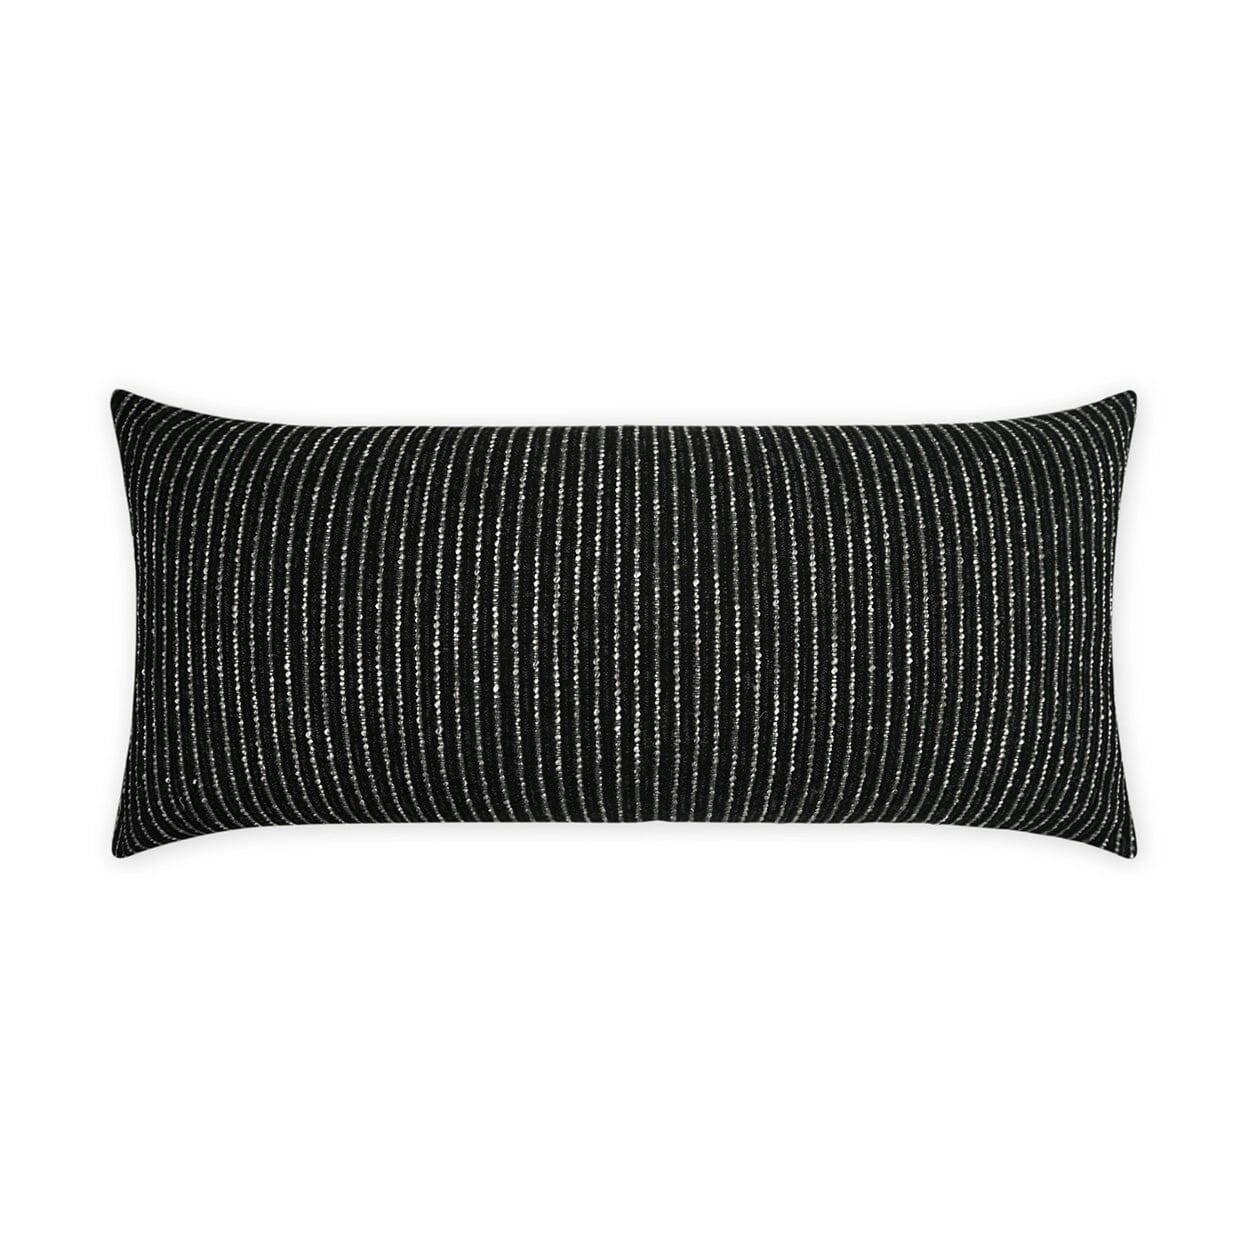 D.V. Kap 12" x 24" Outdoor Lumbar Pillow | Burson Onyx Pillows D.V Kap Home